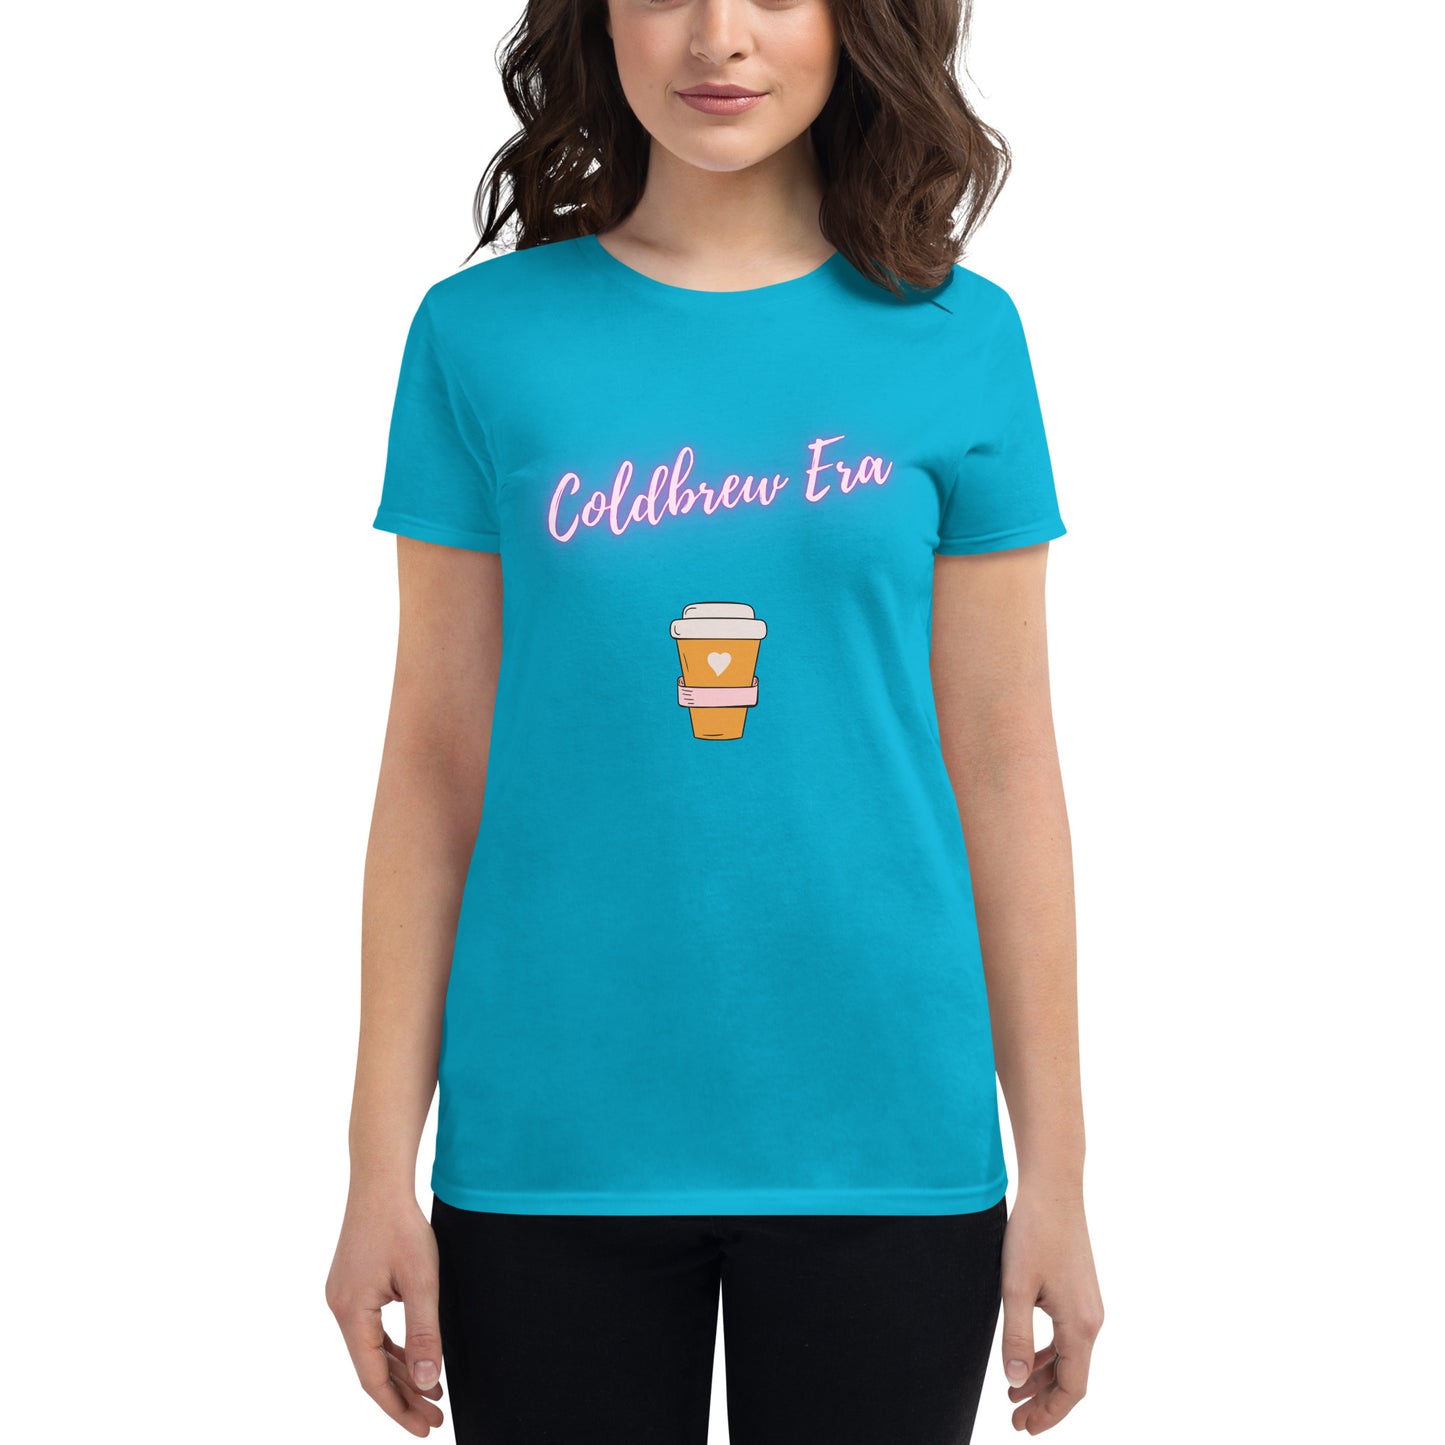 Coldbrew Era t-shirt